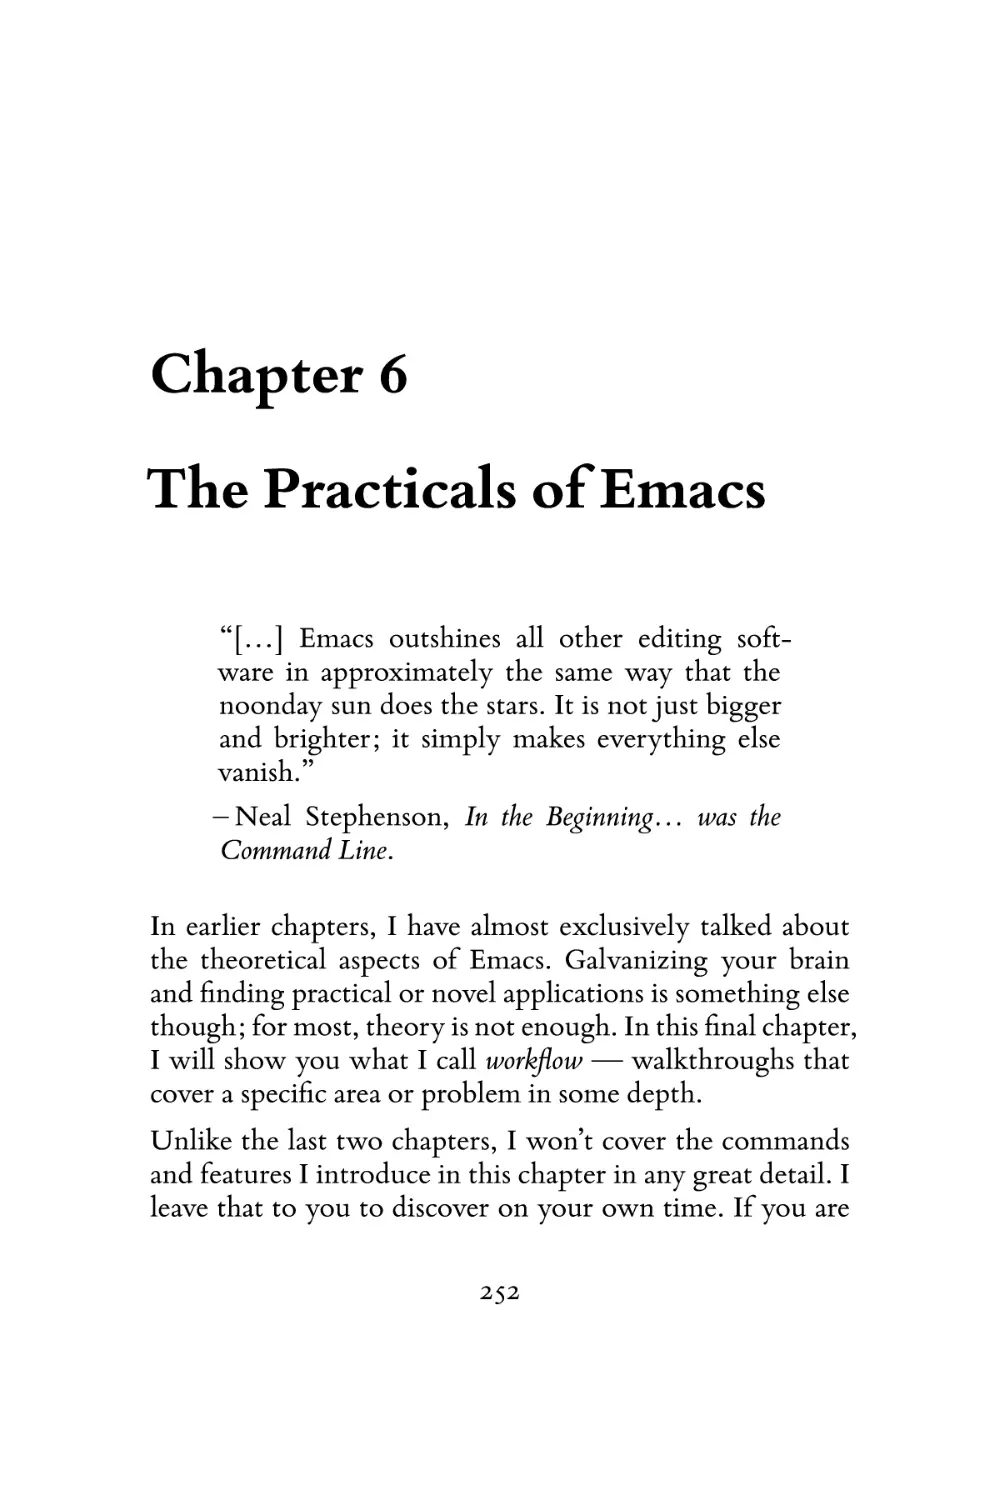 The Practicals of Emacs